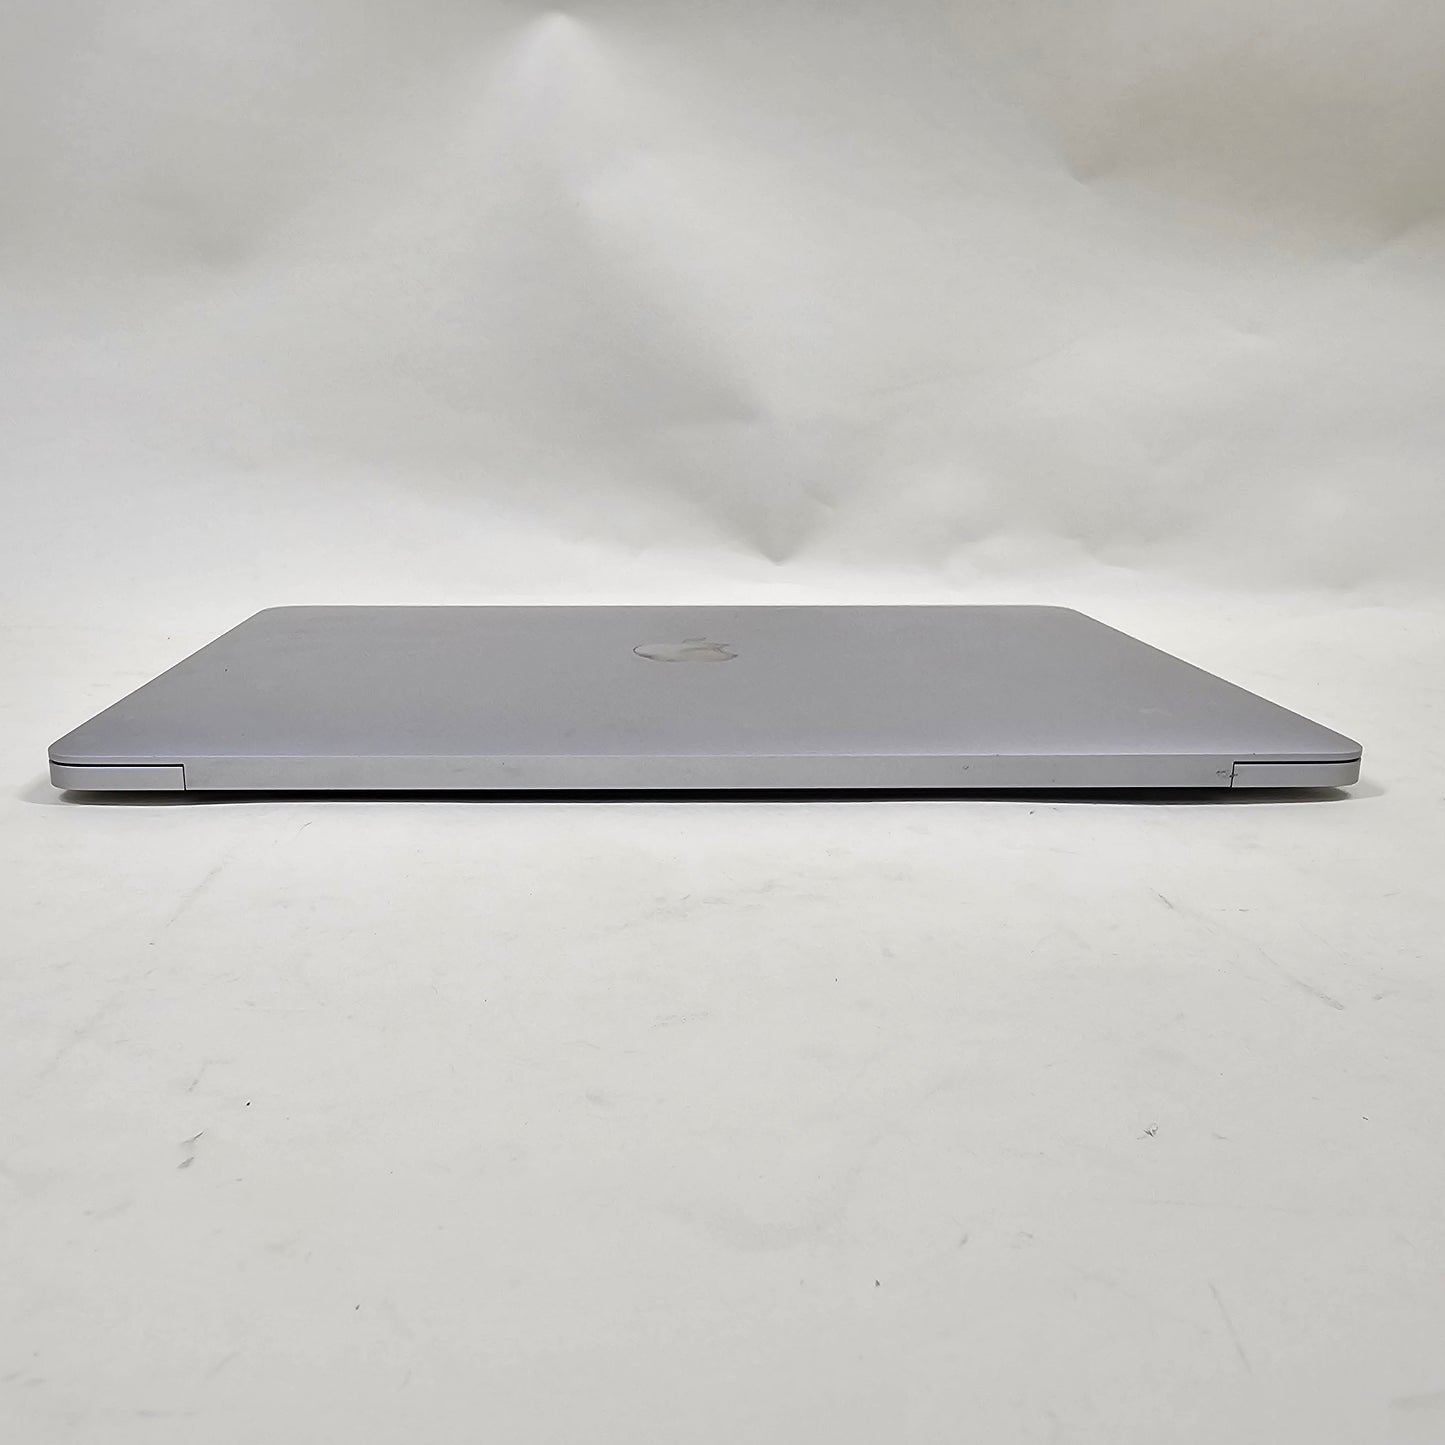 2019 Apple MacBook Pro 13" i5-8257U 1.4GHz 8GB RAM 128GB SSD Silver A2159